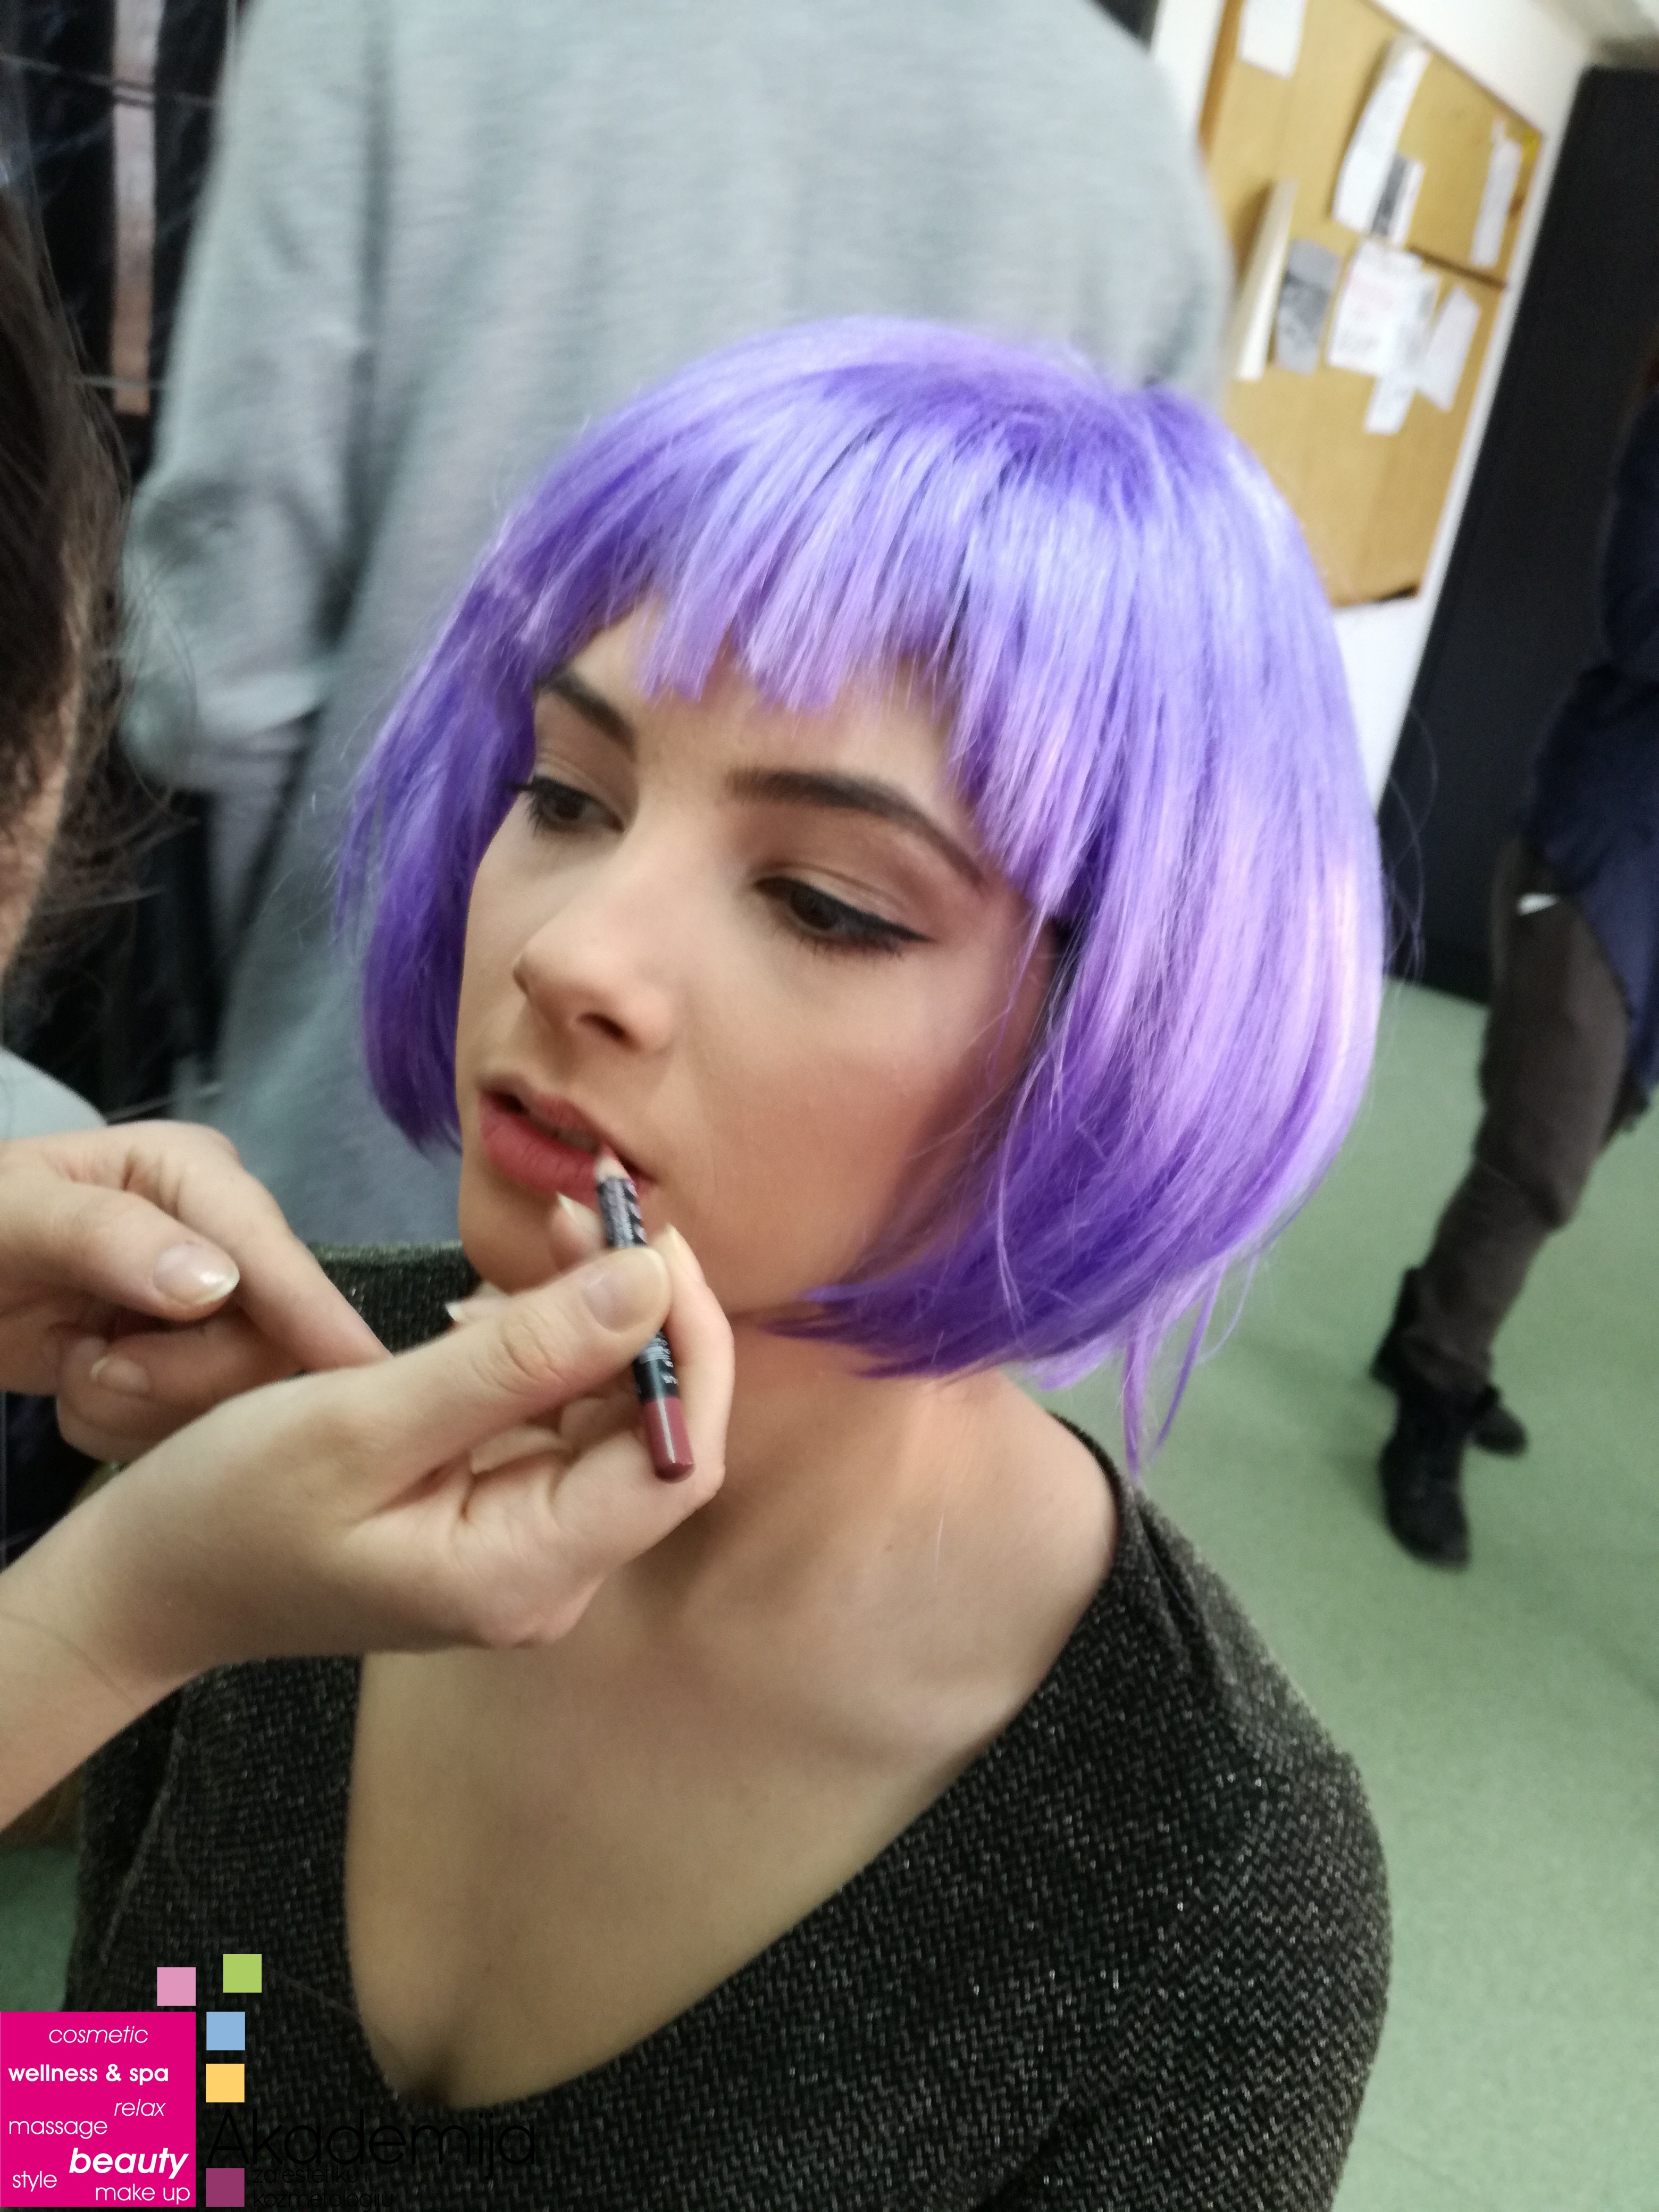 FILM FAKULTETA DRAMSKIH UMETNOSTI – šminka i frizura studenti makeup smera